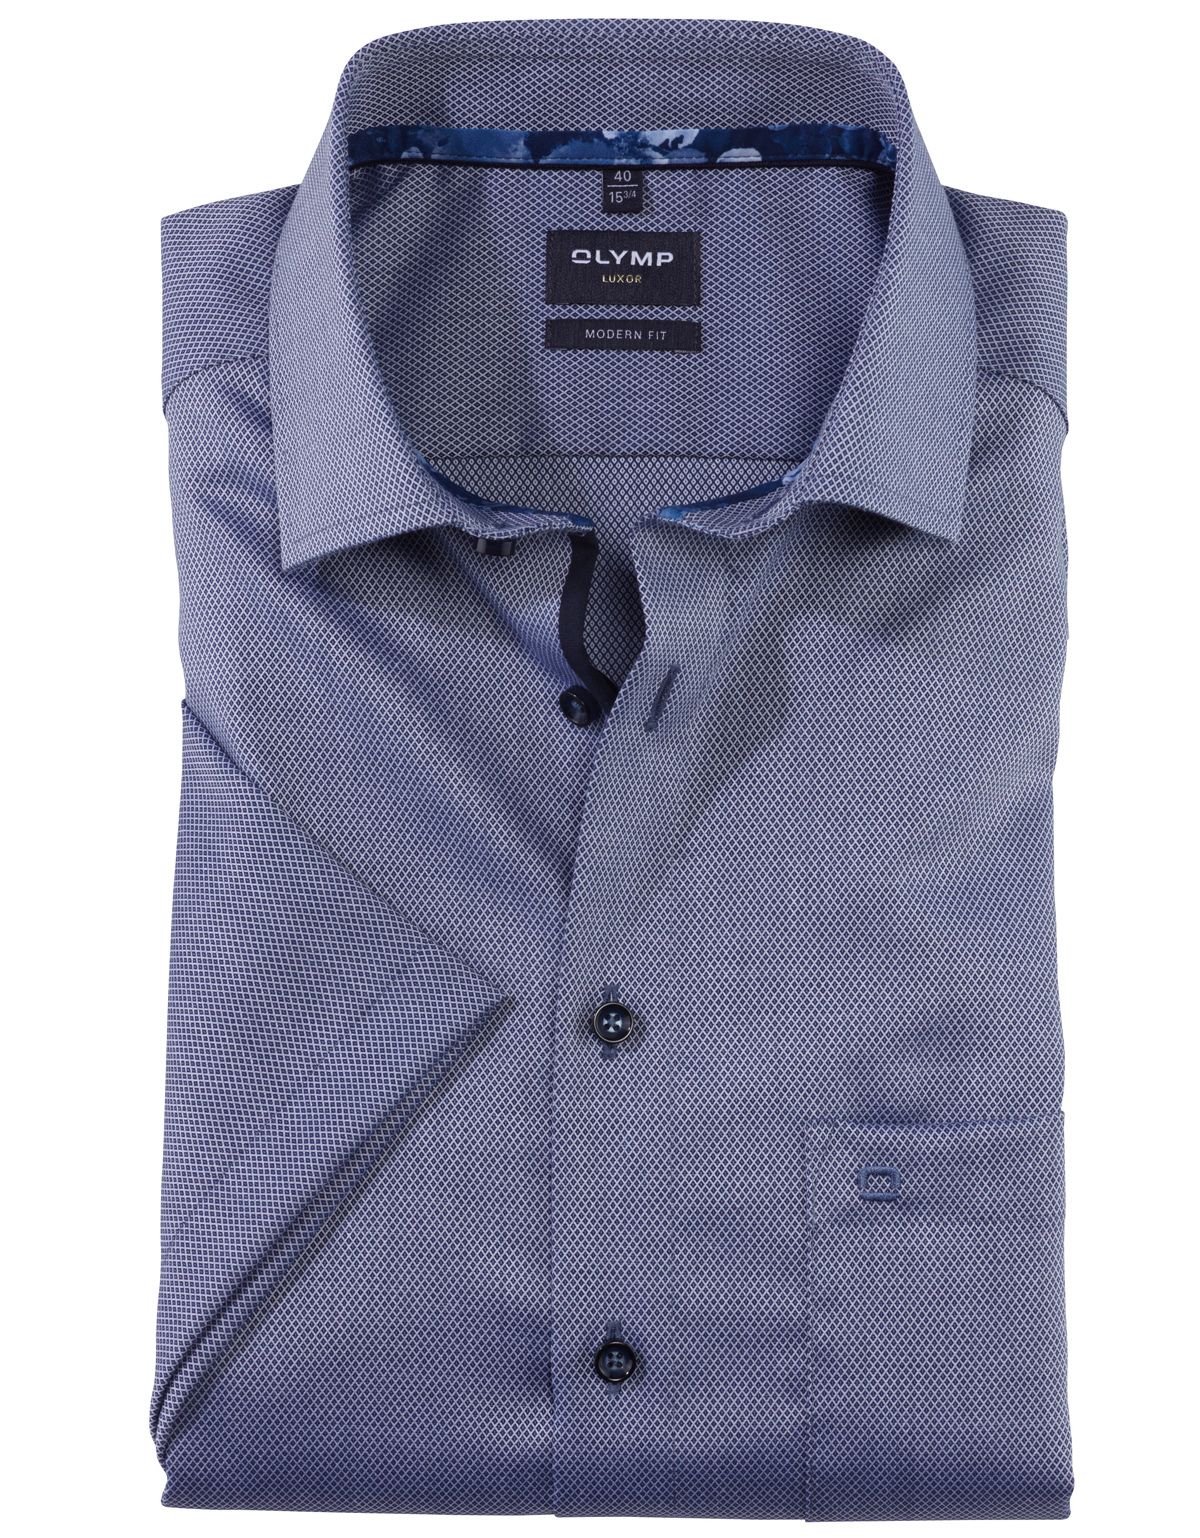 Рубашка мужская OLYMP Luxor, modern fit, фактурная[СИНИЙ]